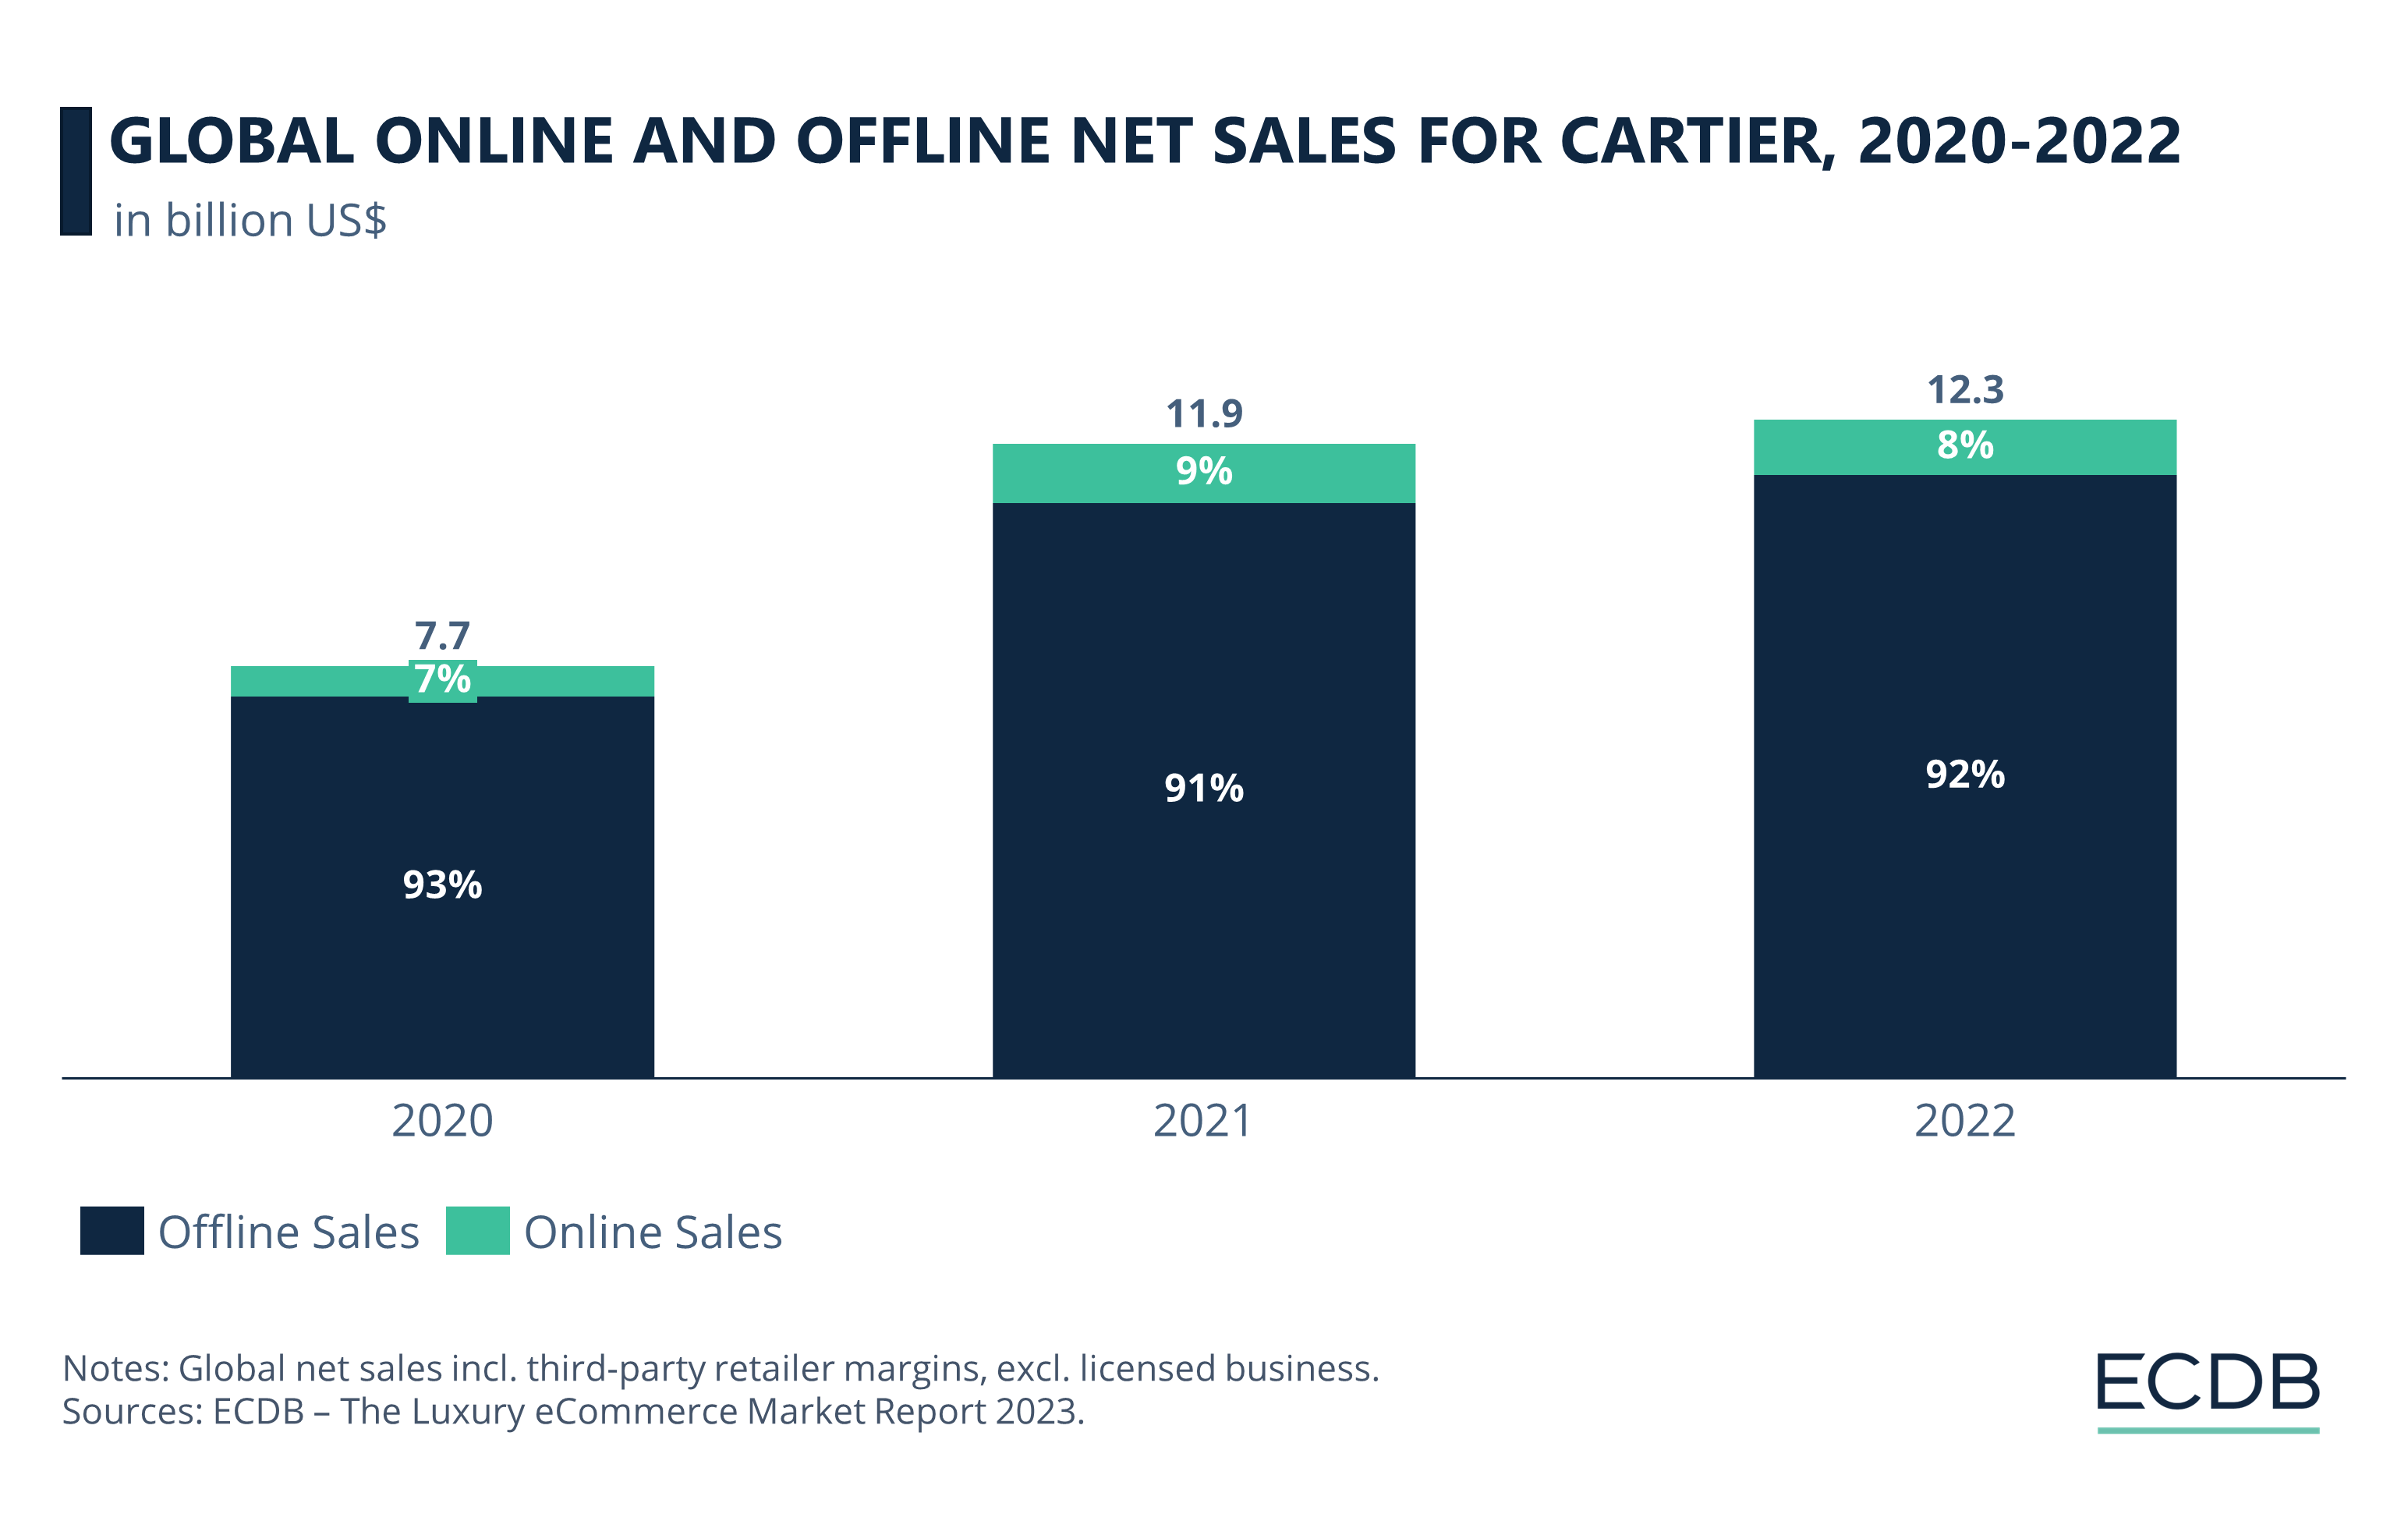 Global Online and Offline Net Sales for Cartier, 2020-2022